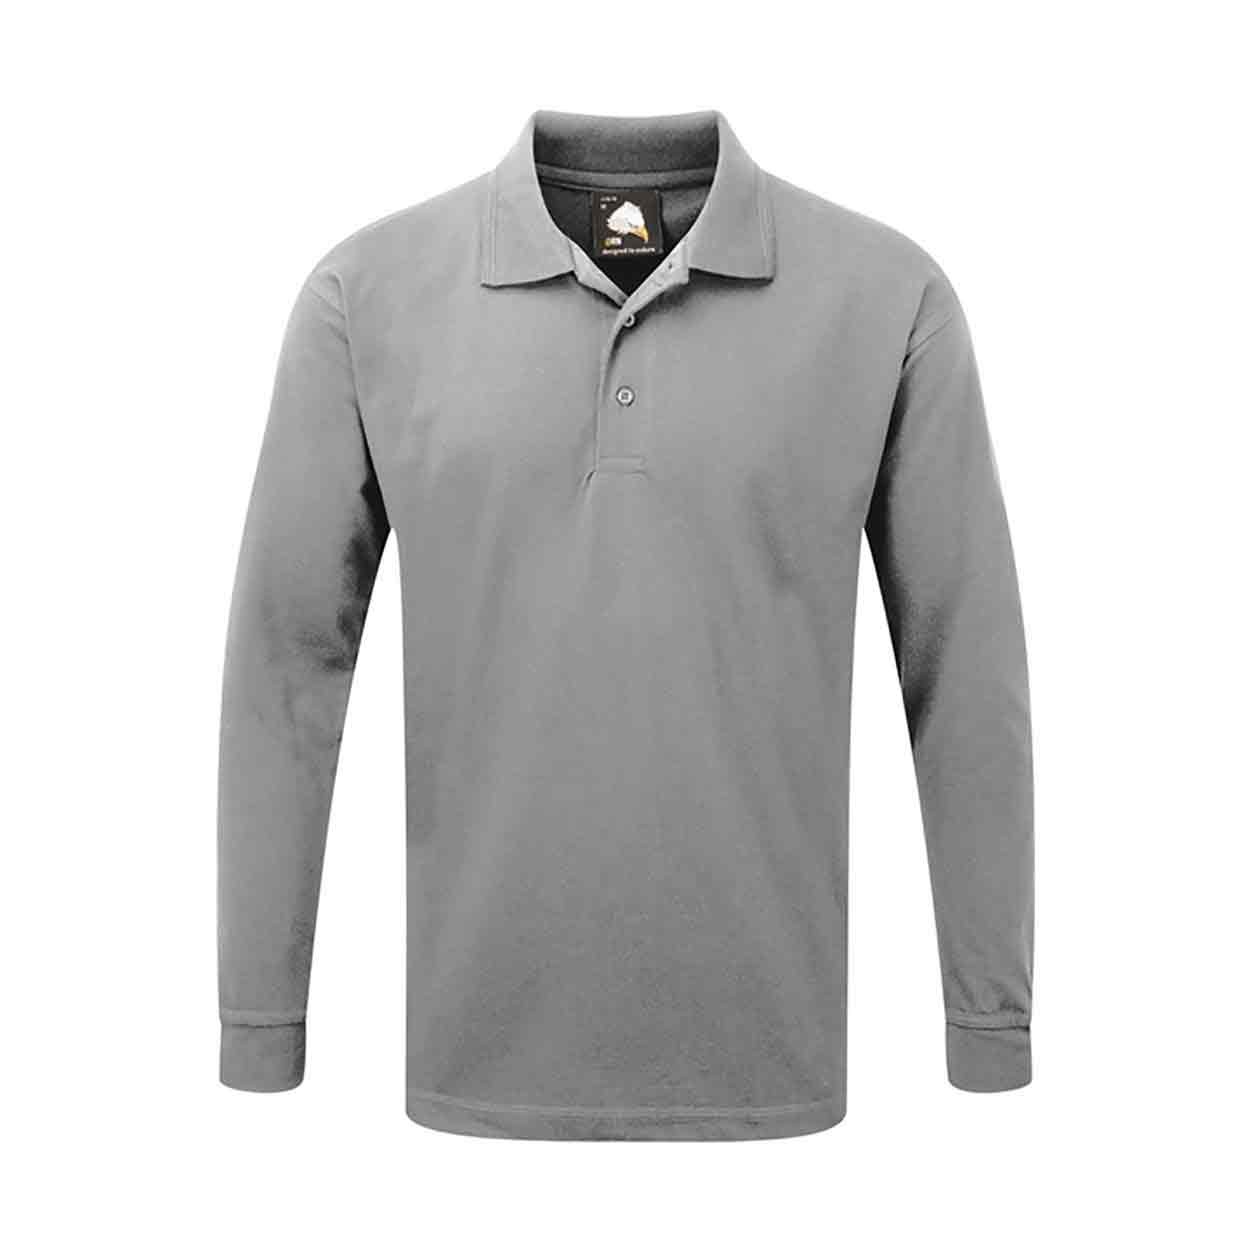 Orn 1170 Weaver Premium L/S Poloshirt - Women's Poly Cotton Polo Shirts -  Women's Polo Shirts - Polo Shirts - Leisurewear - Best Workwear